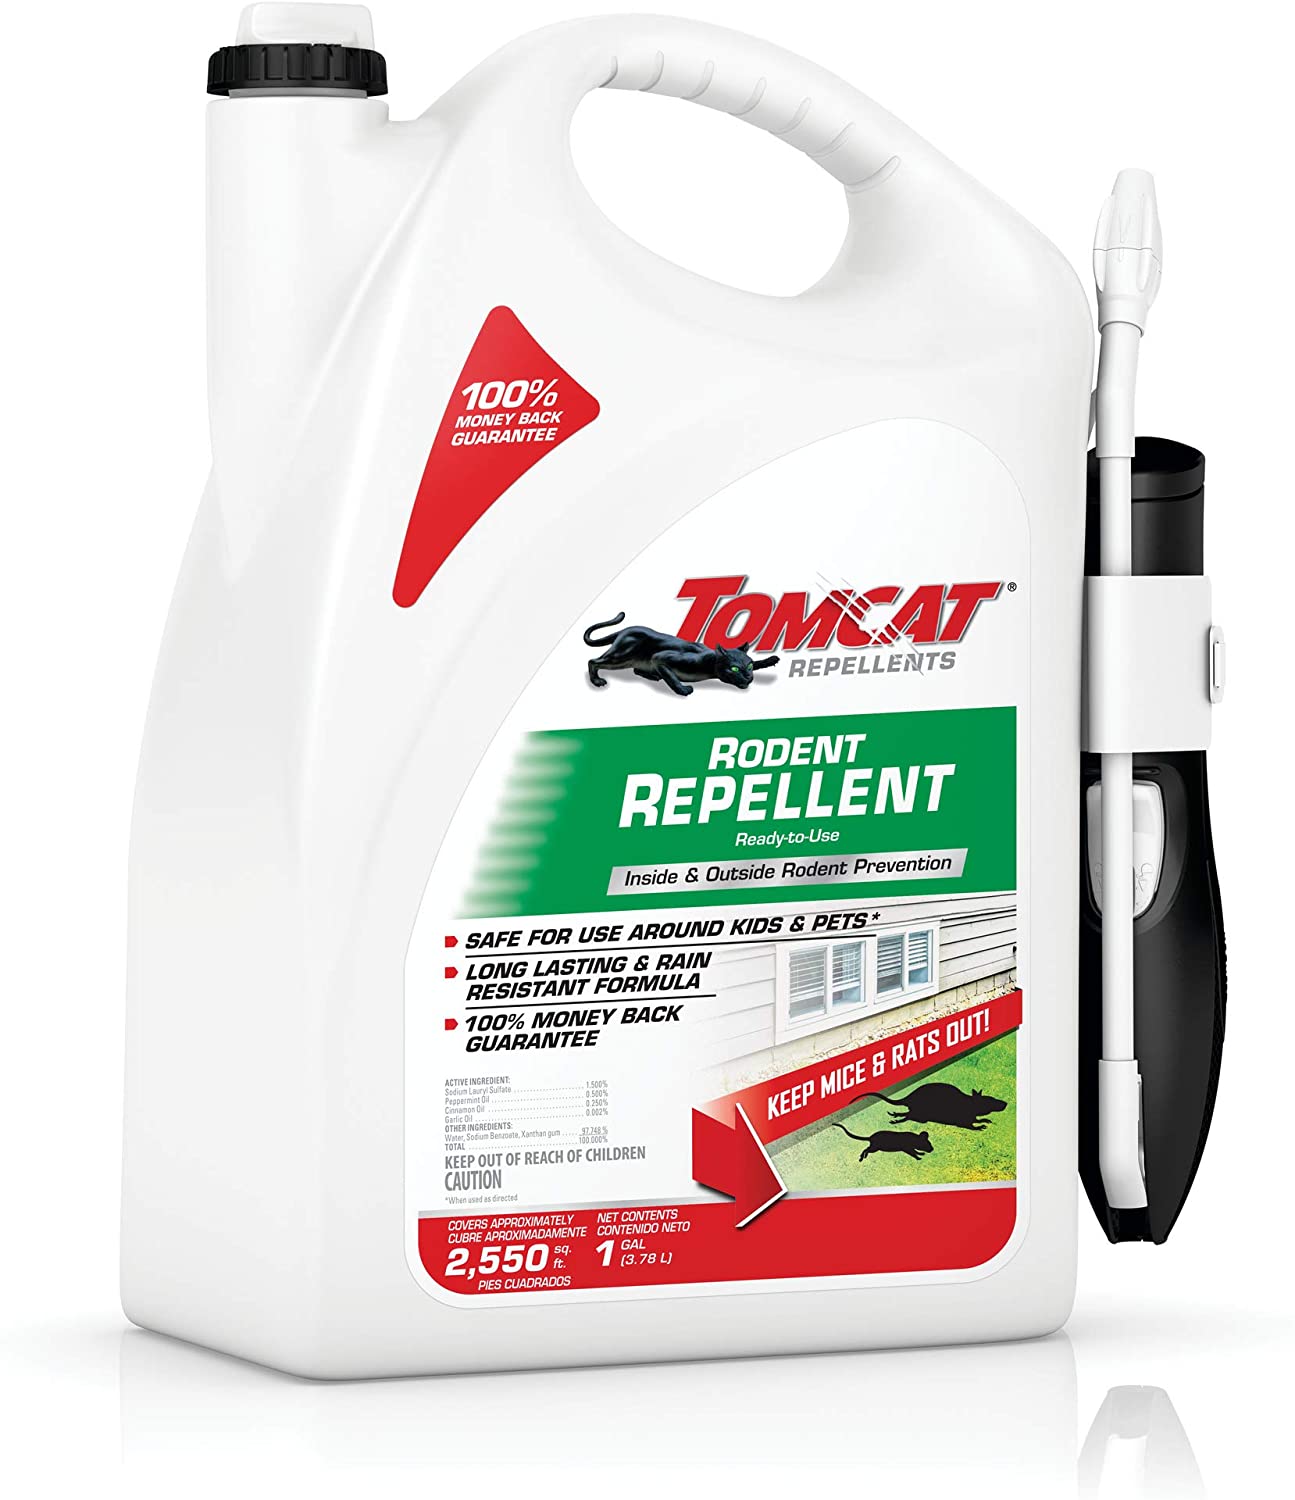 Tomcat Rodent Repellent